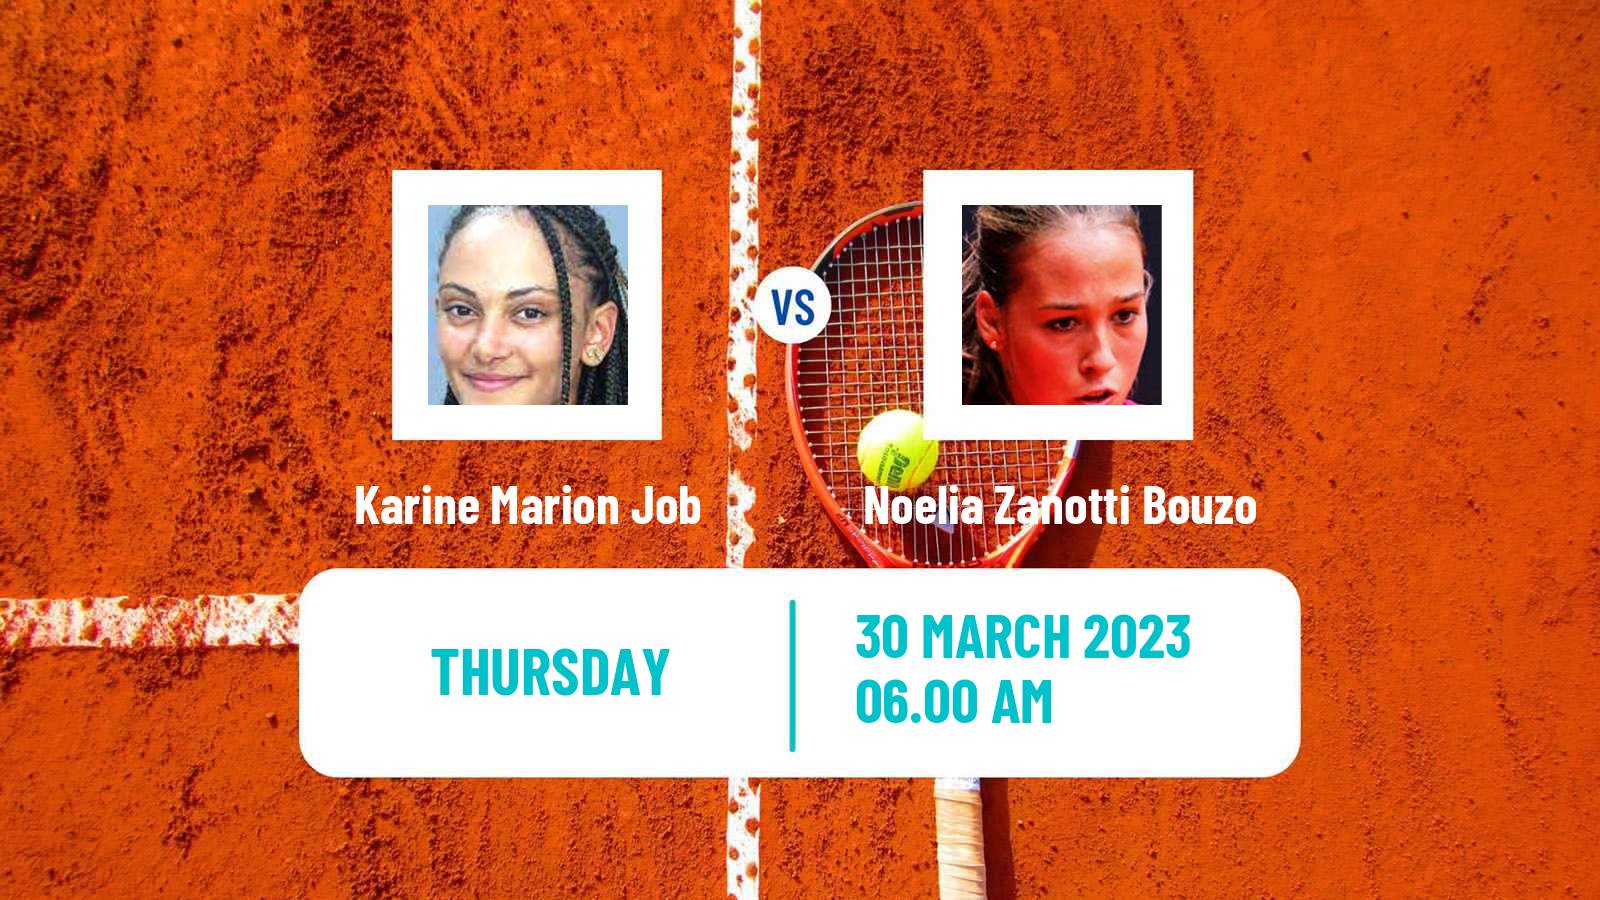 Tennis ITF Tournaments Karine Marion Job - Noelia Zanotti Bouzo